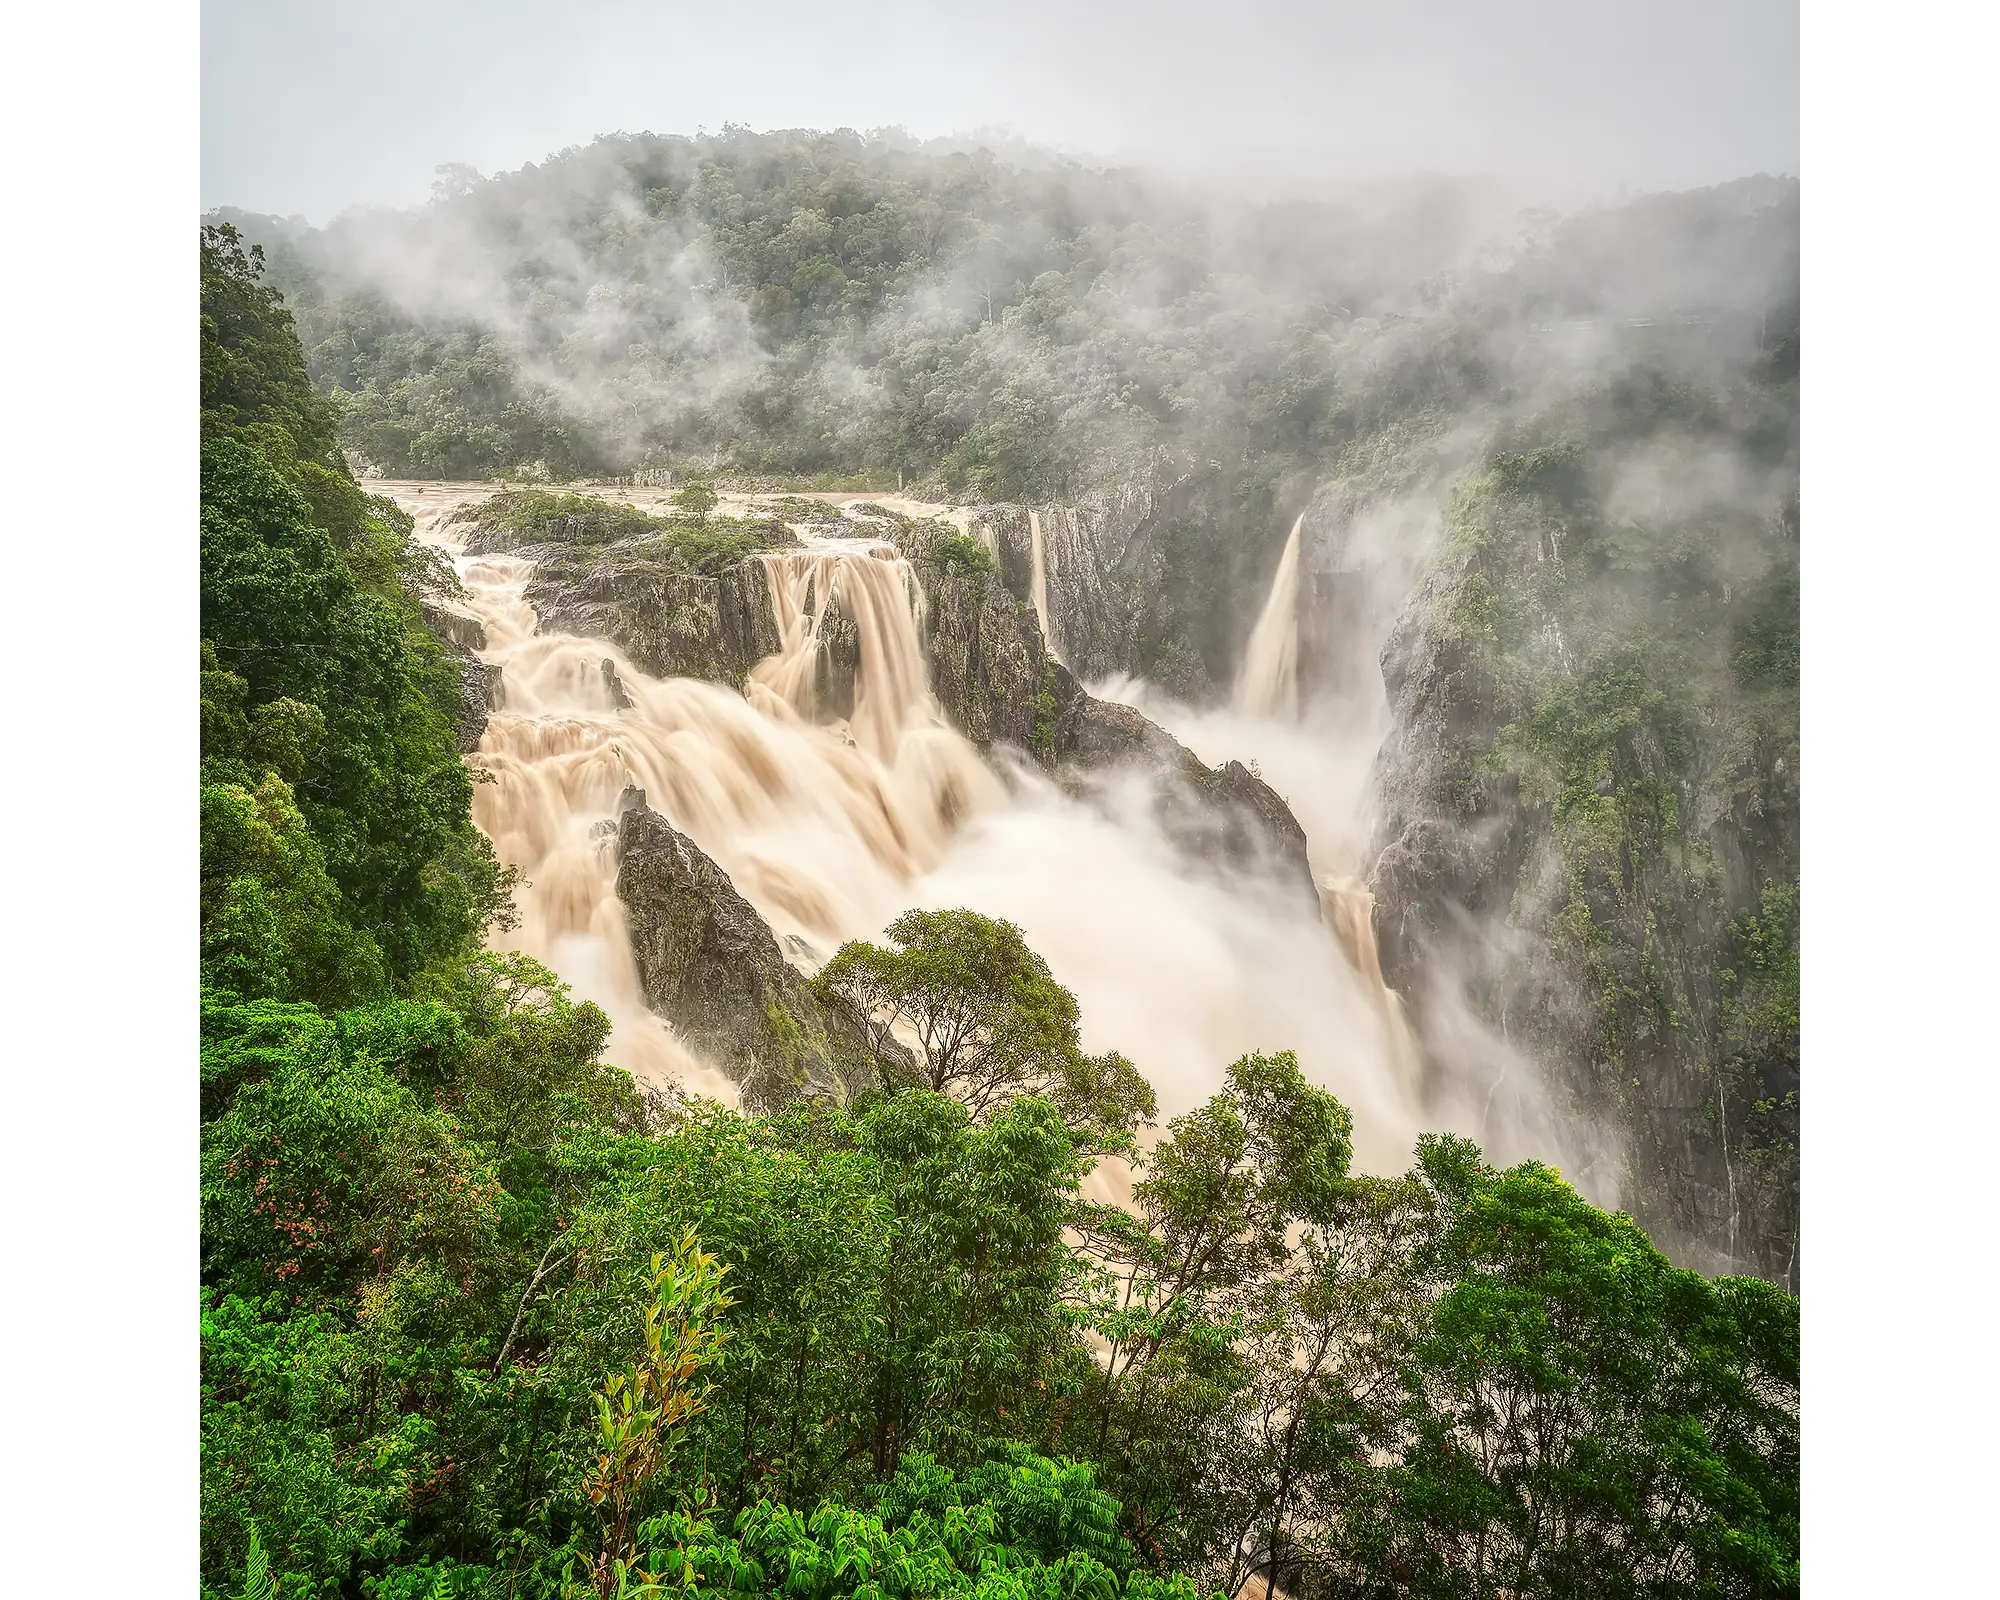 Barron Falls after rain, Barron Gorge National Park, Queensland.